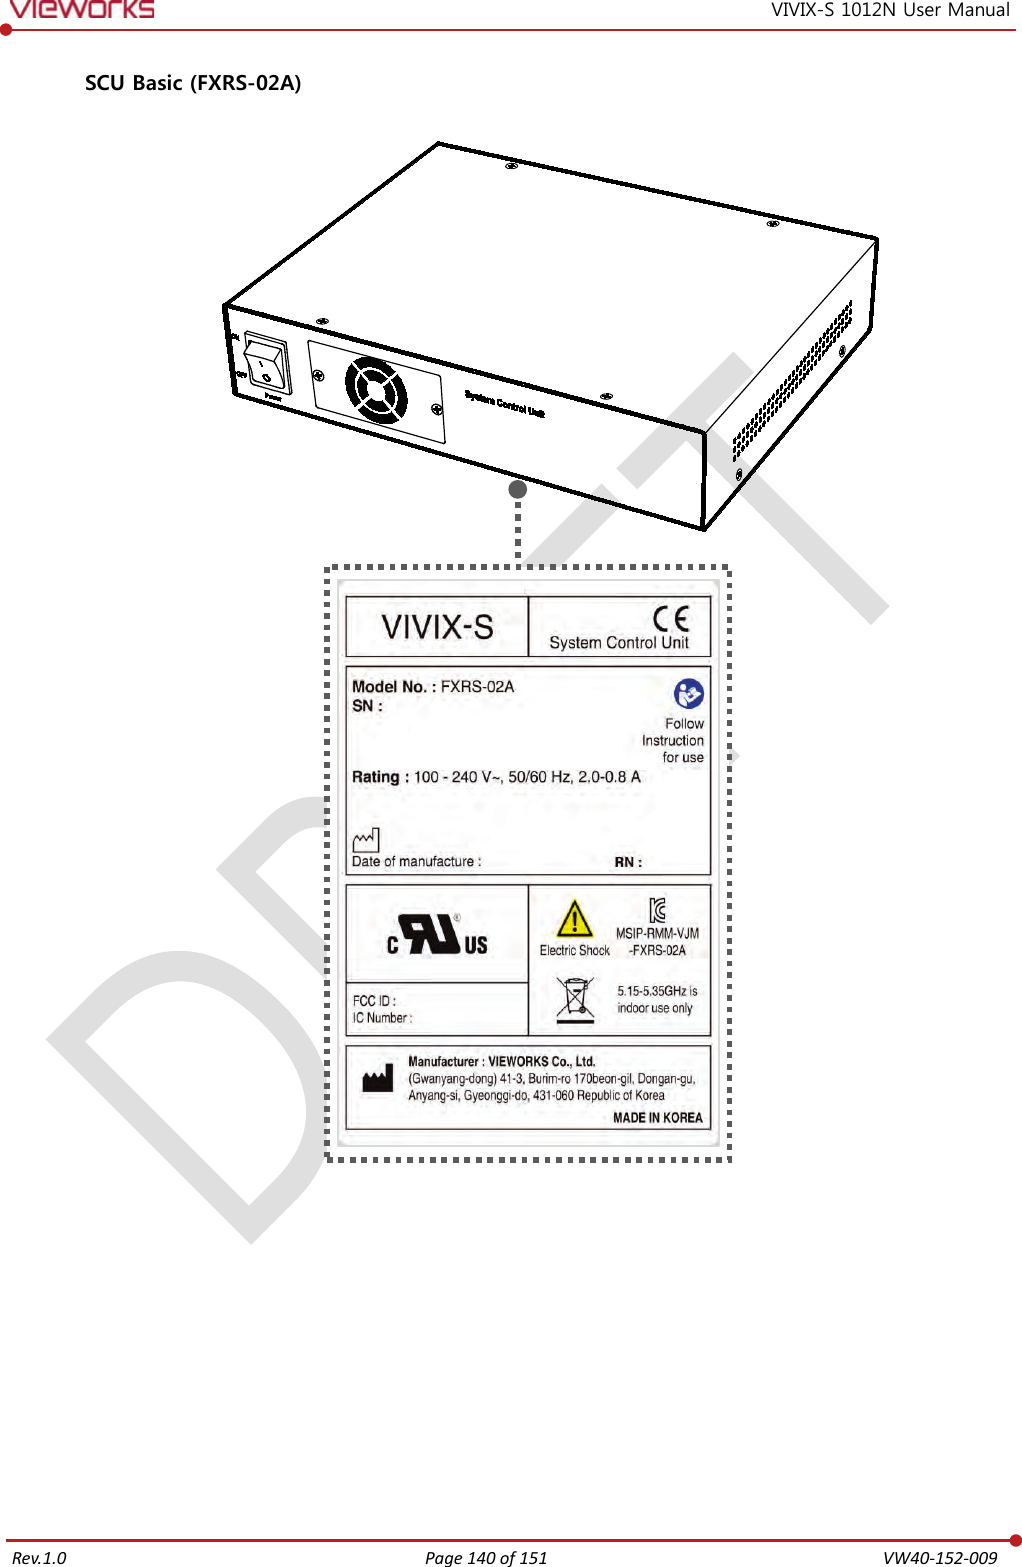   Rev.1.0 Page 140 of 151  VW40-152-009 VIVIX-S 1012N User Manual  SCU Basic (FXRS-02A)     